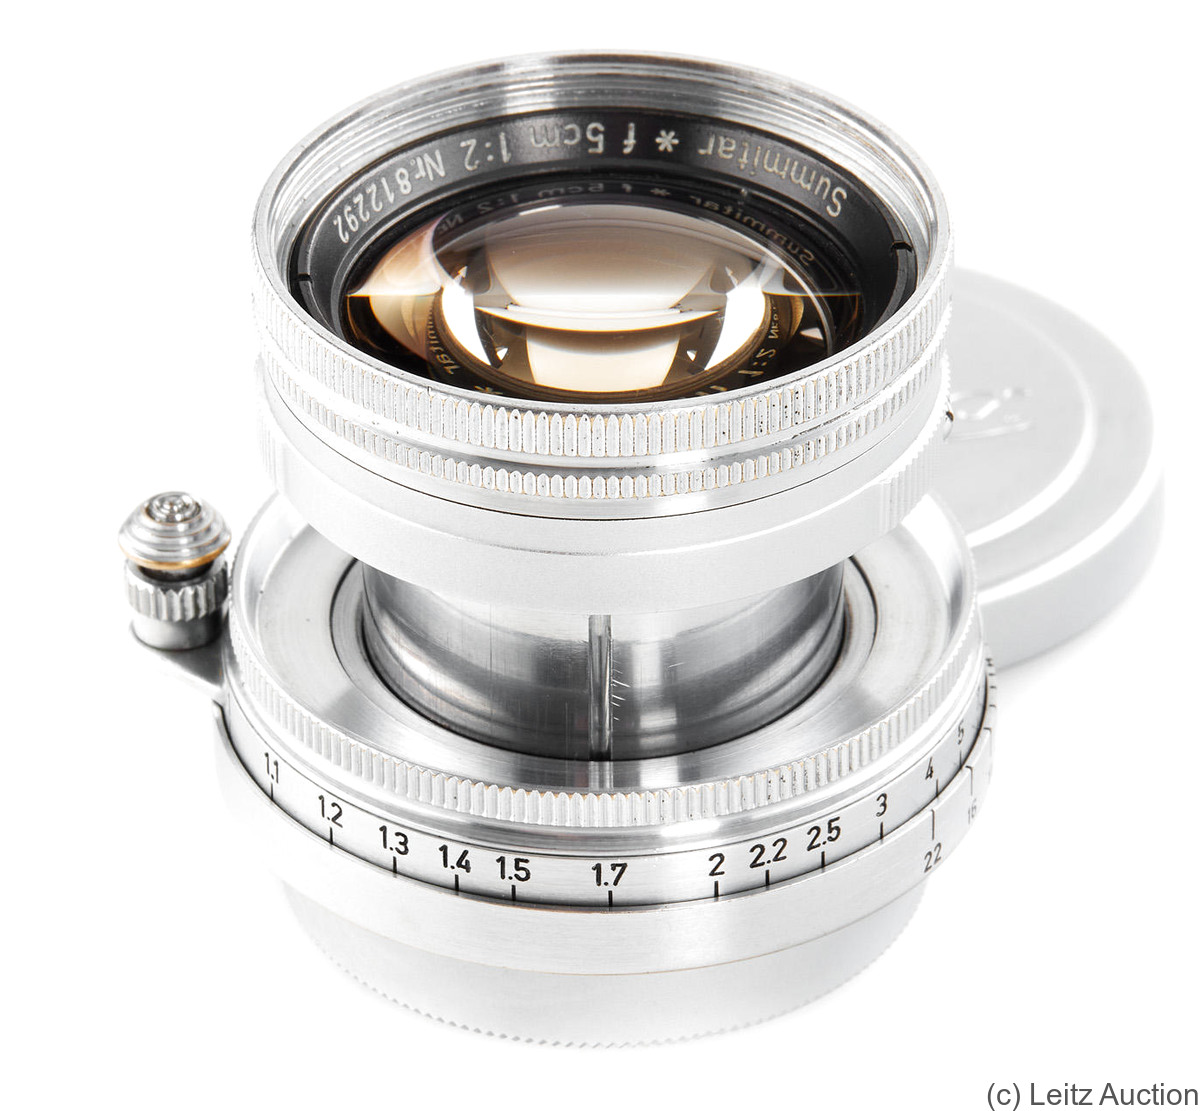 Leitz: 50mm (5cm) f2 Summitar* (SM, Summicron prototype) camera